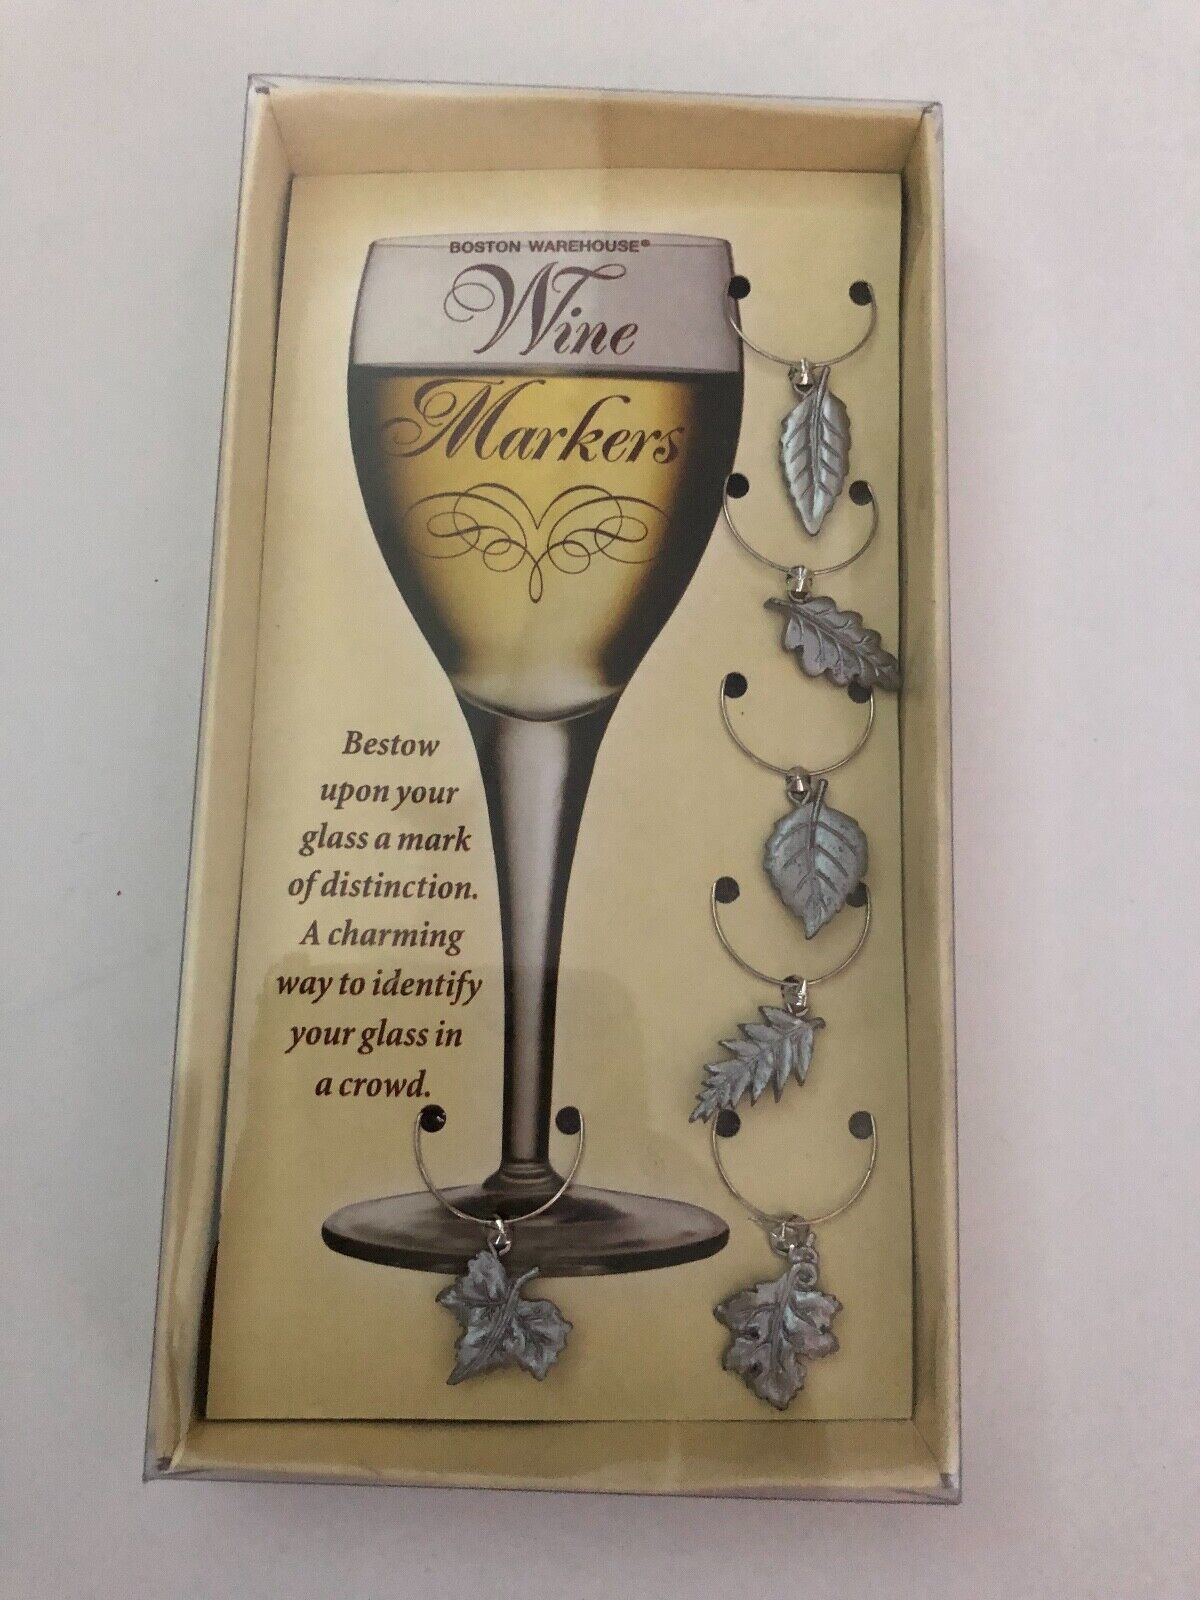 BOSTON WAREHOUSE Wine Glass Charms Markers silver leaves metal Theme NIB 6p 2001 - $8.90